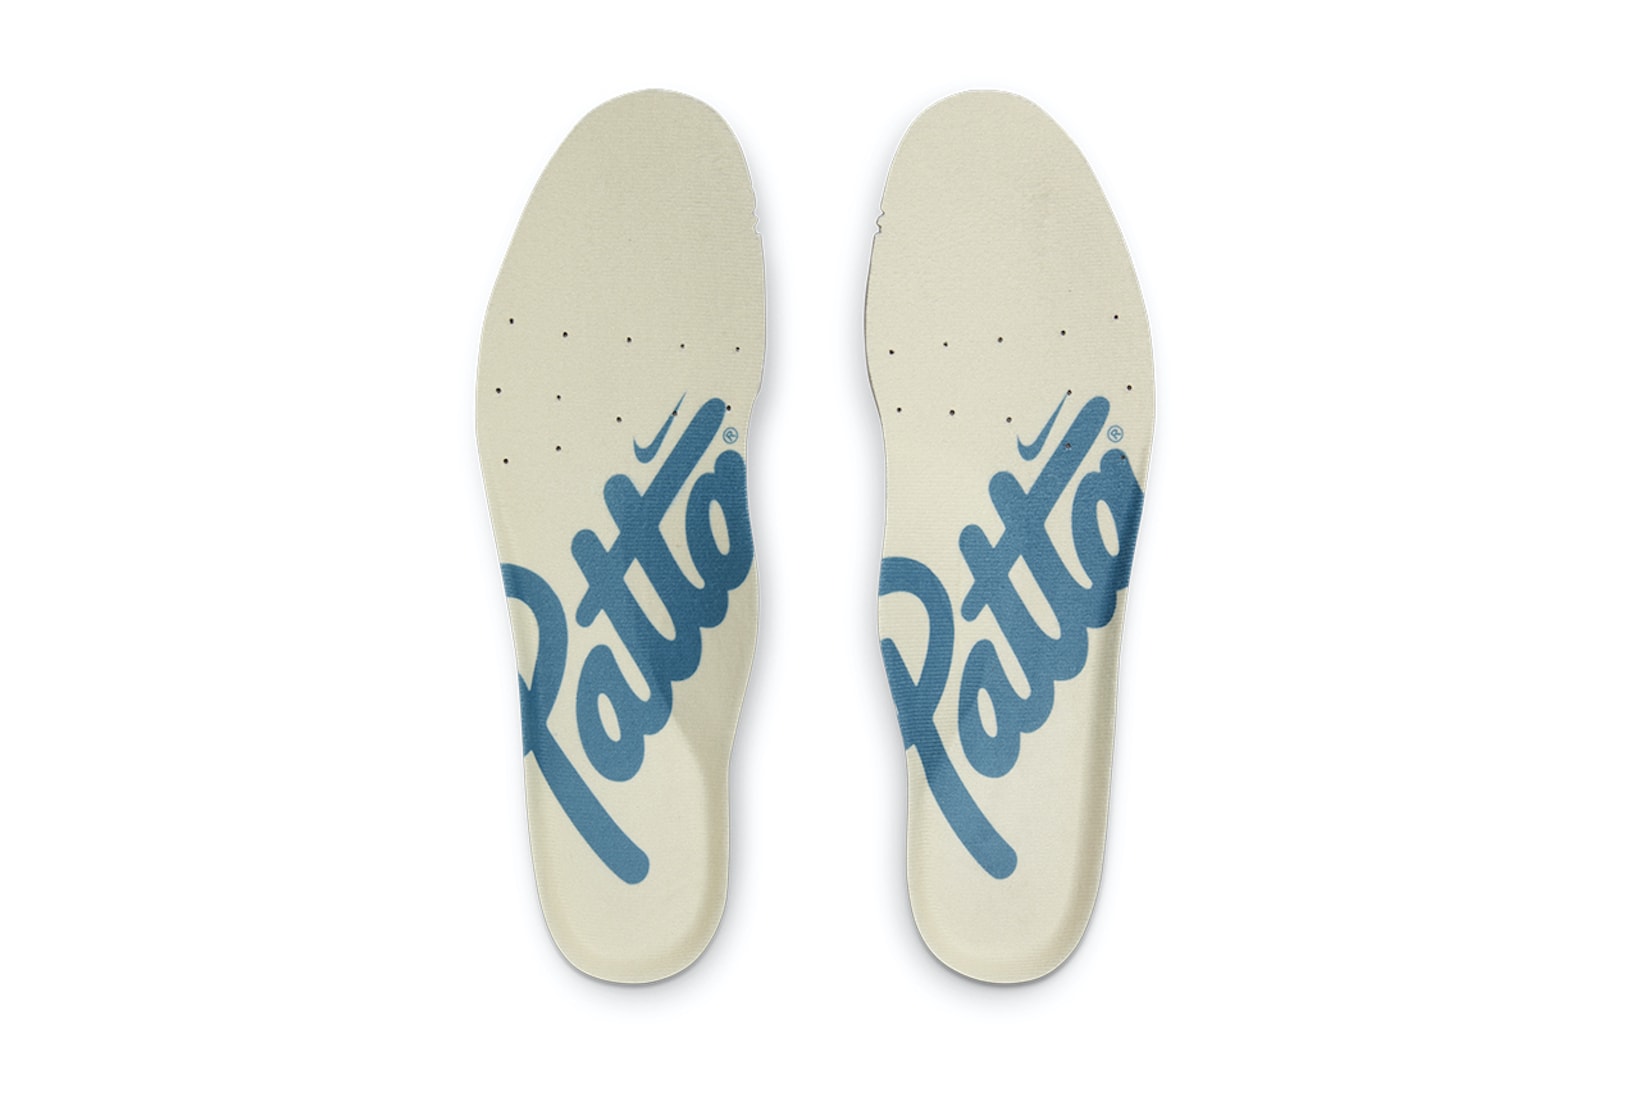 patta nike air max 1 am1 noise aqua blue gray white collaboration sneakers footwear kicks shoes insoles